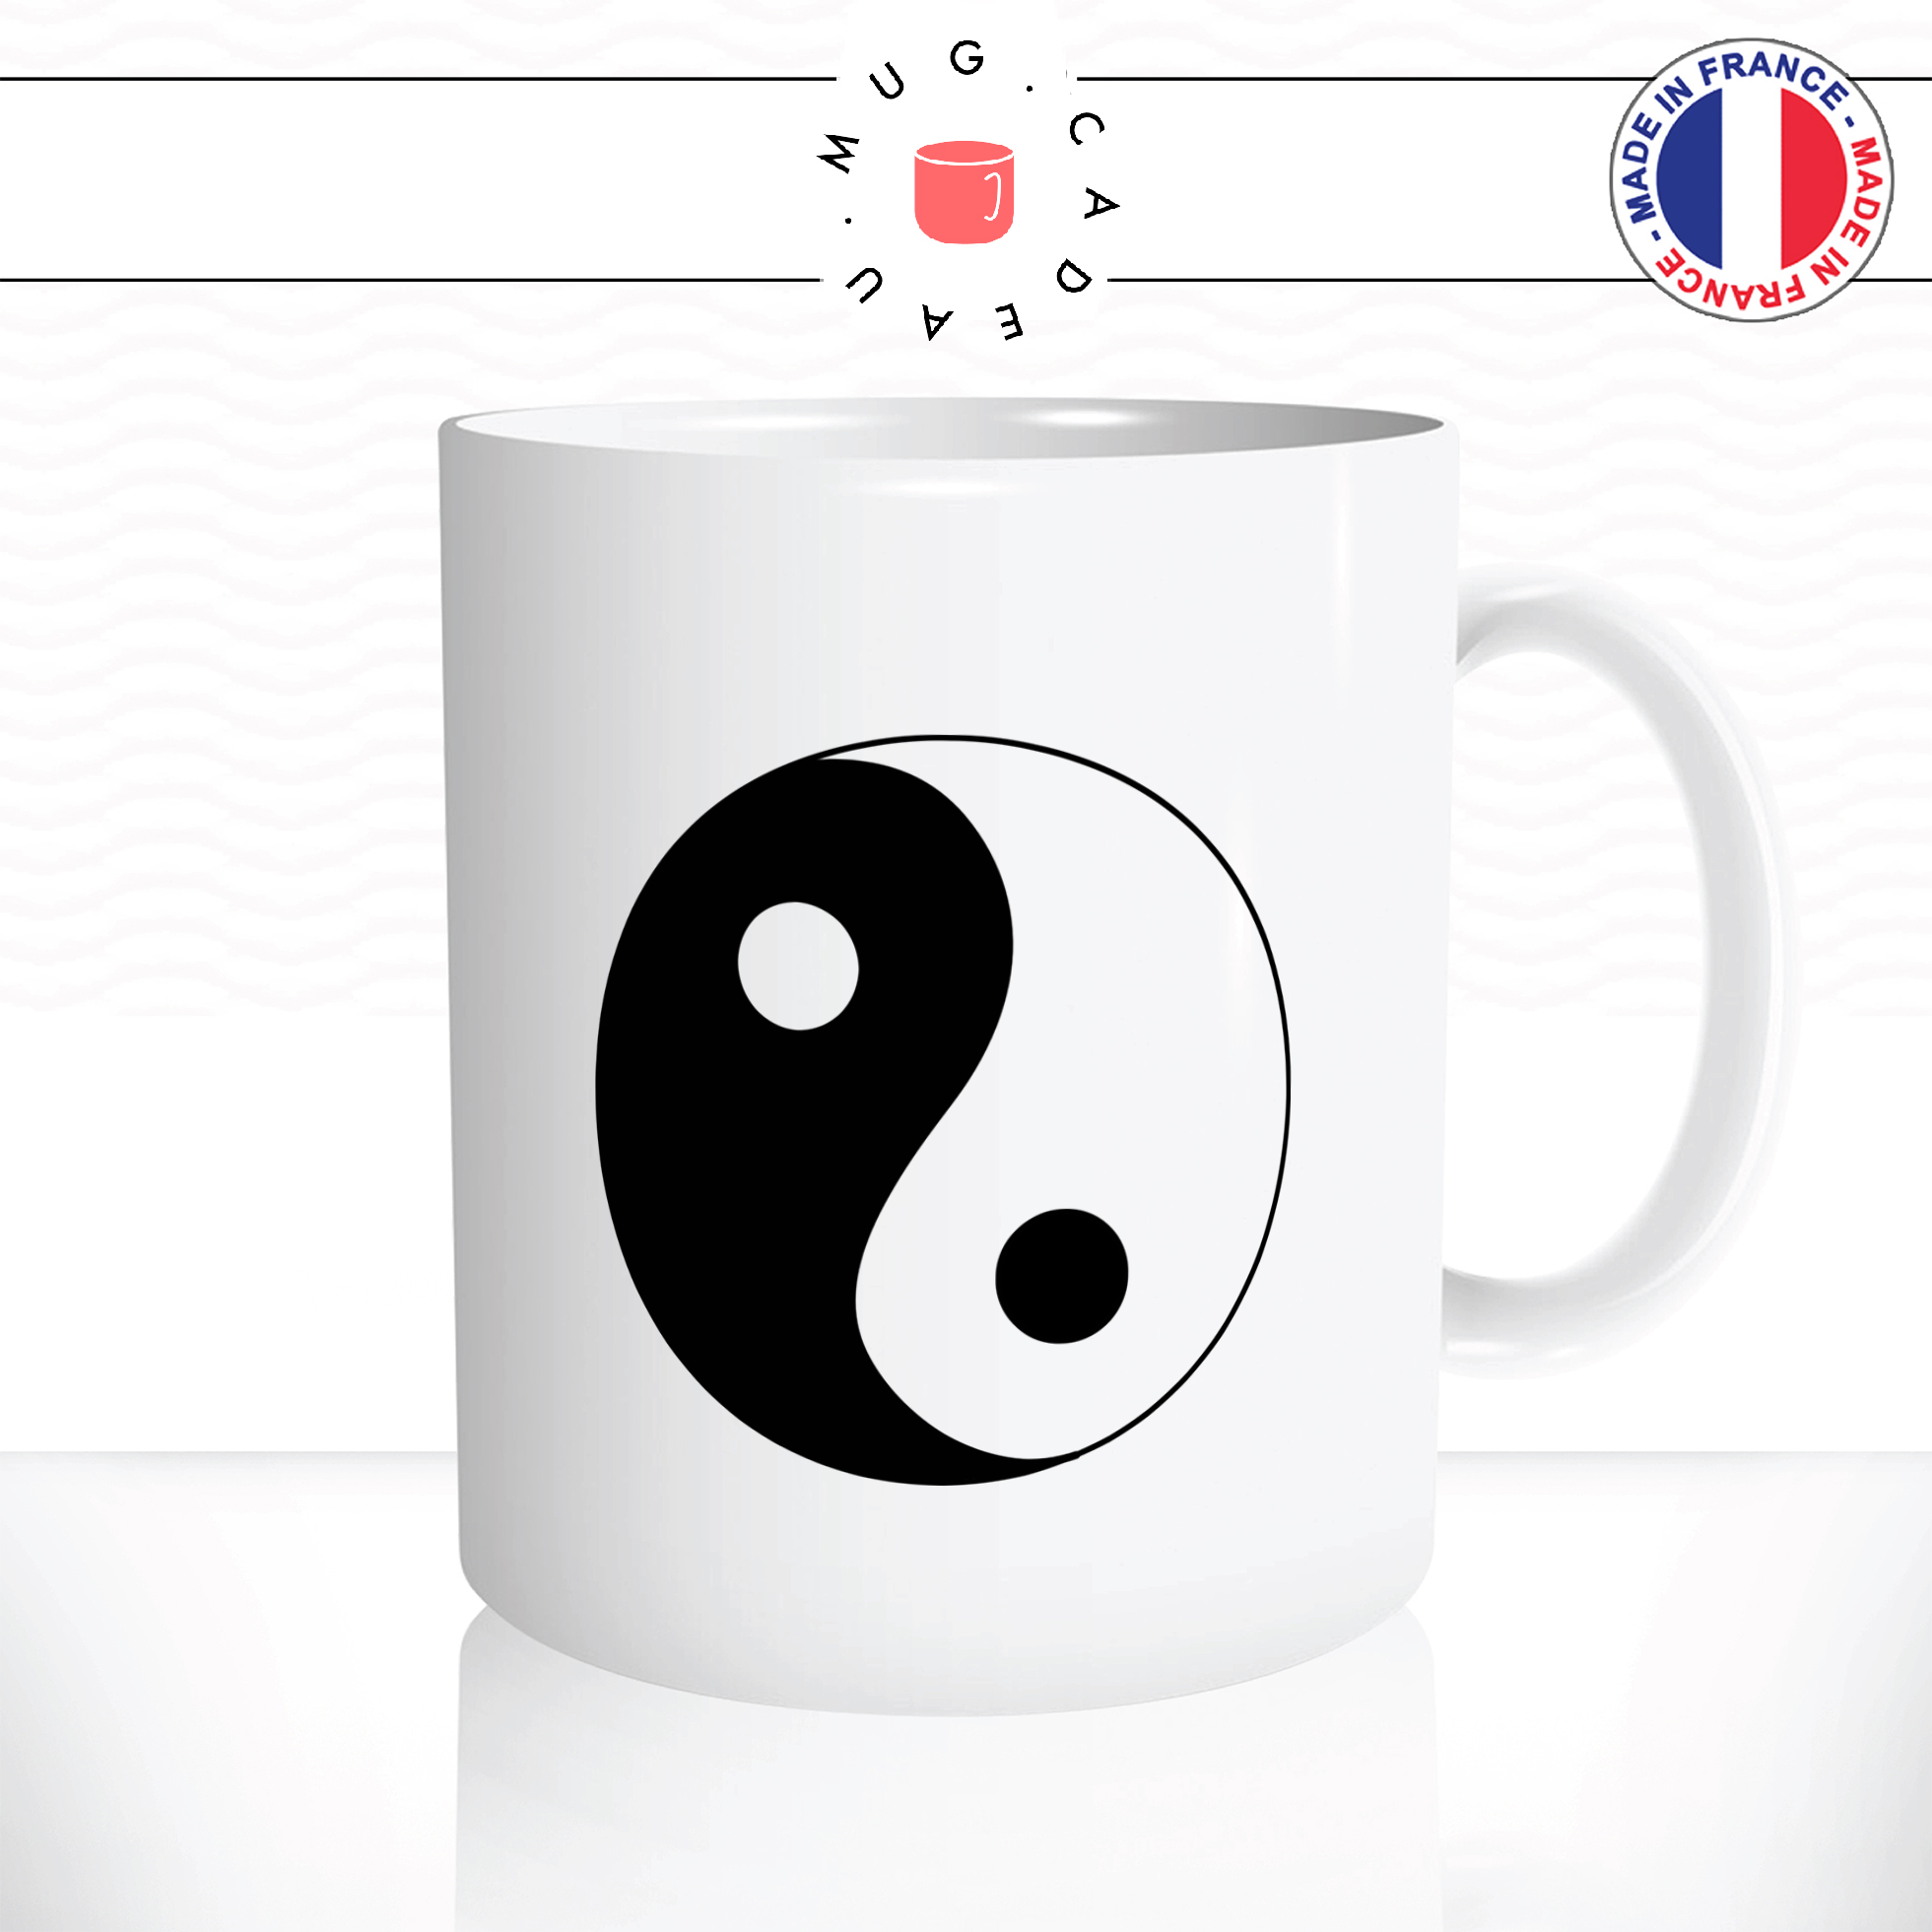 mug-tasse-ref4-religion-buddhiste-yin-yang-noir-blanc-univers-cafe-the-mugs-tasses-personnalise-anse-droite